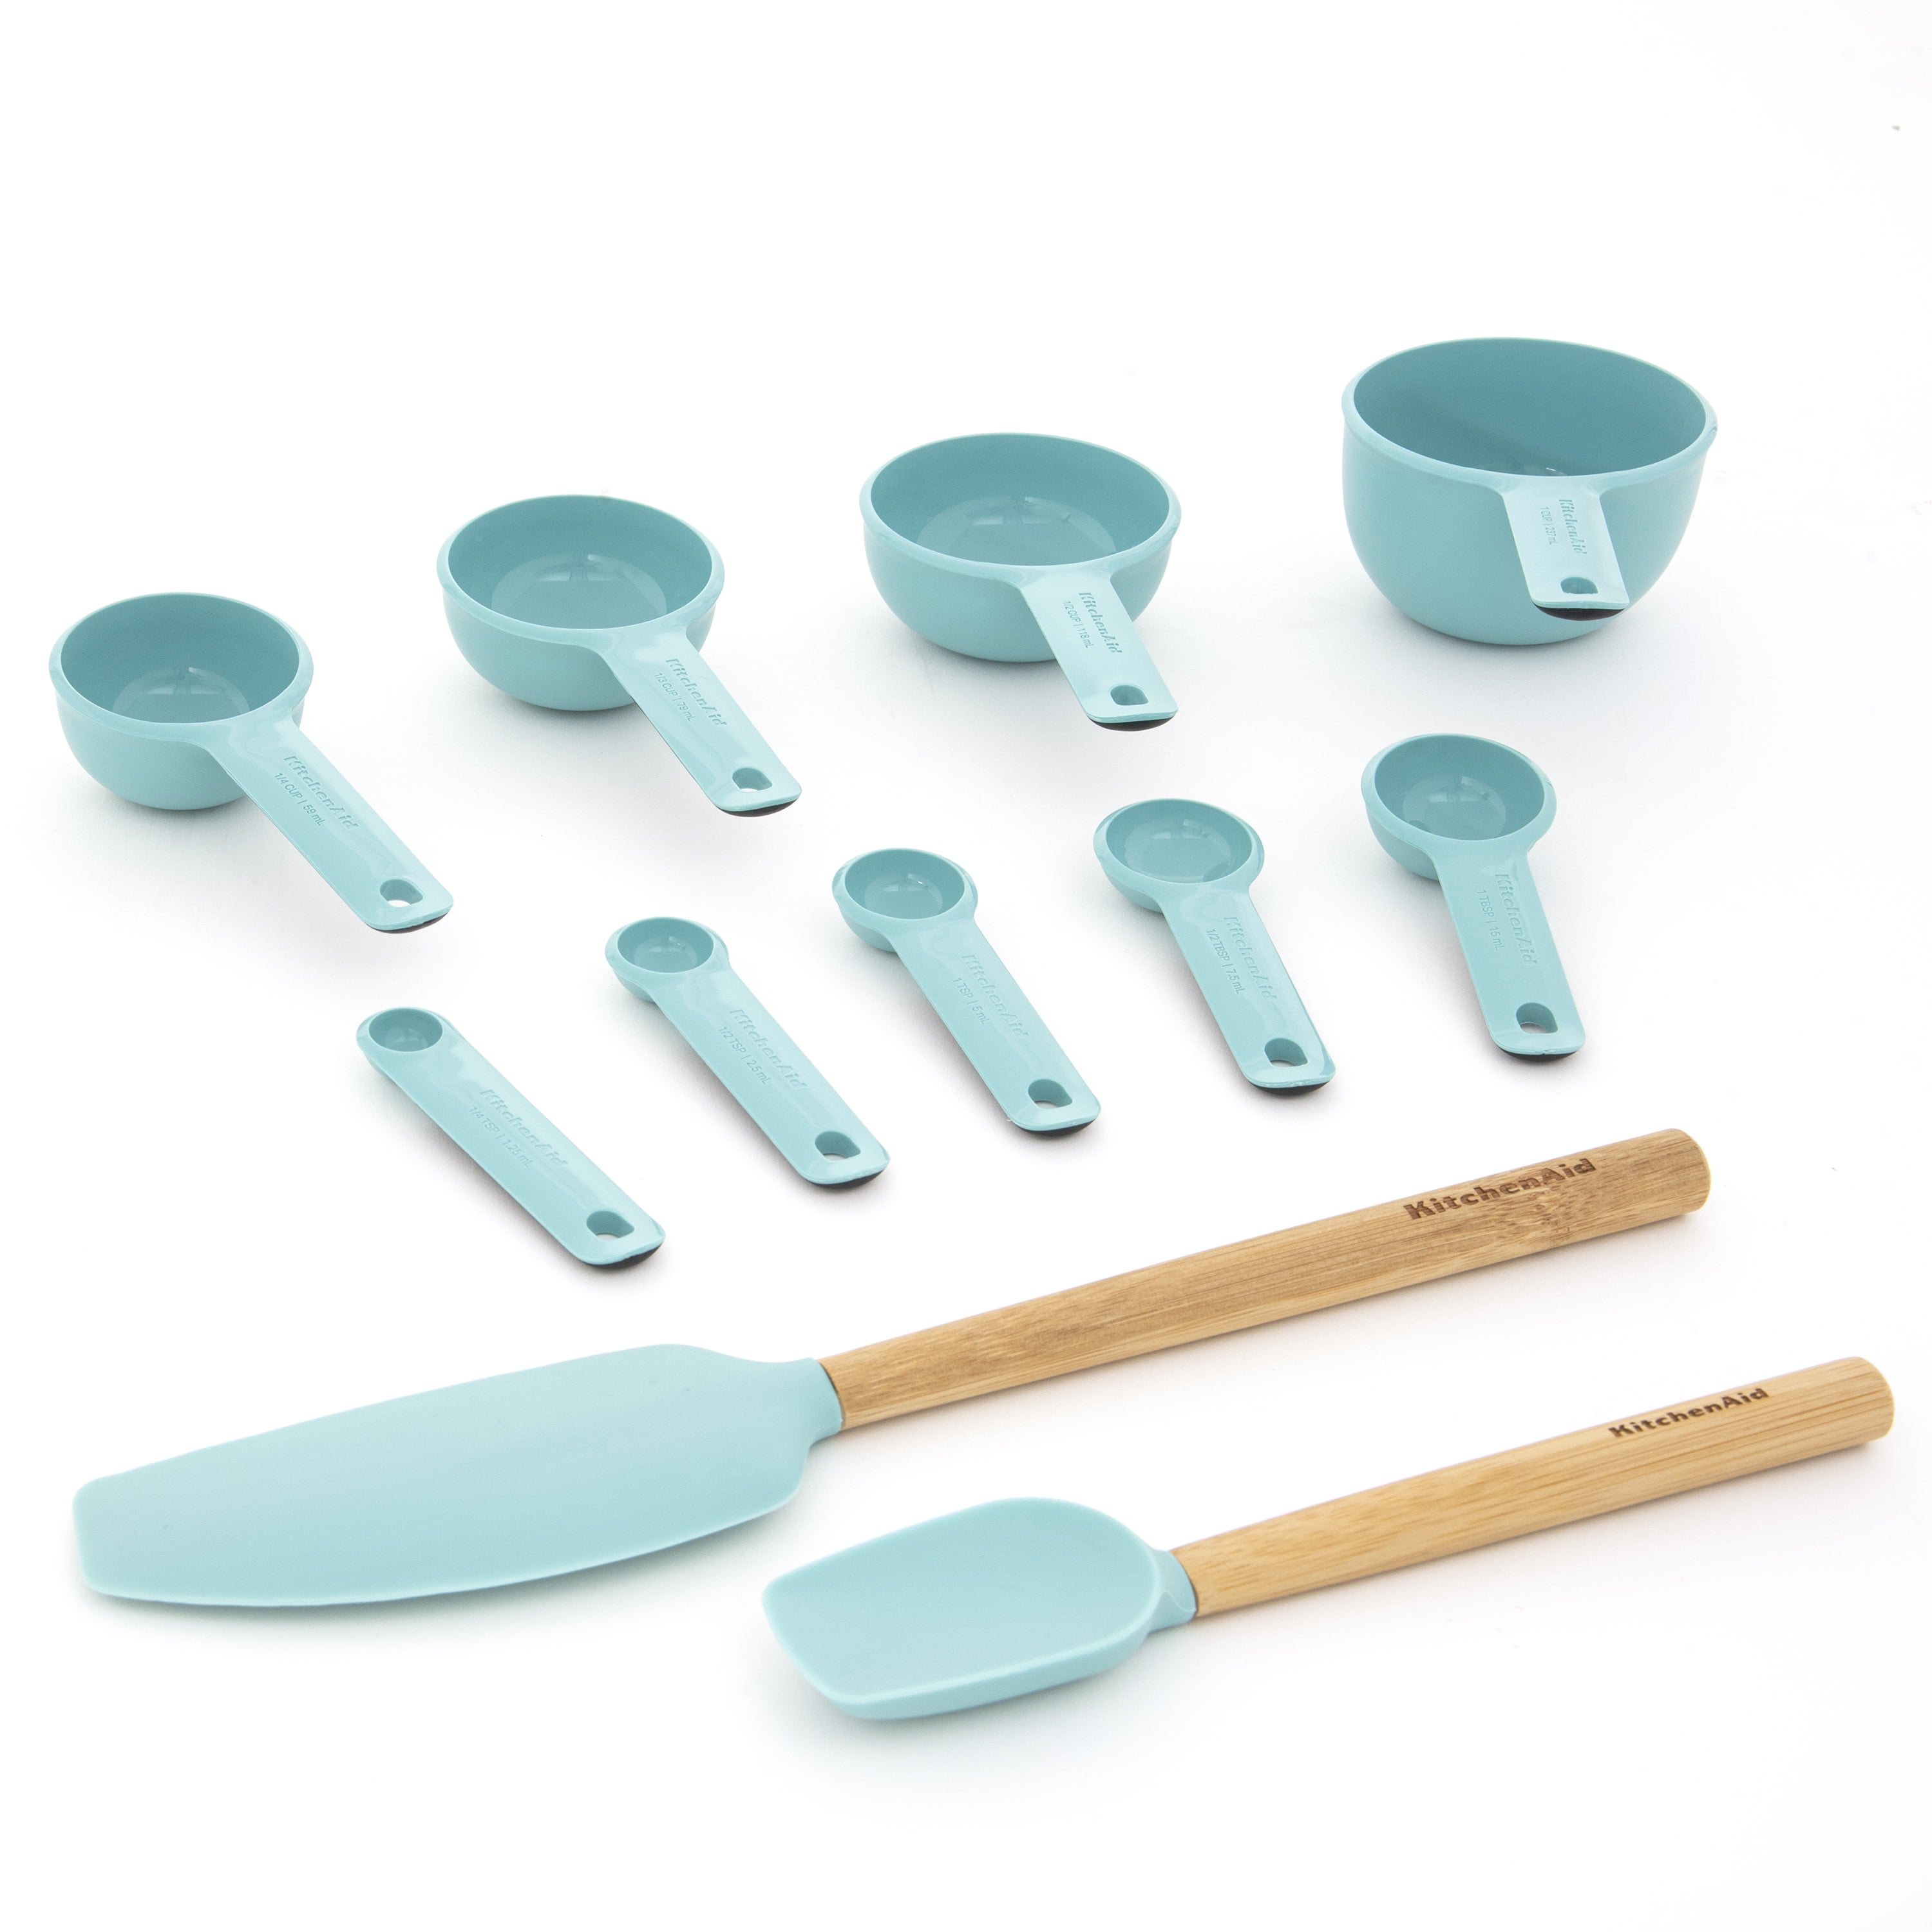 Kitchenaid 4-Piece Plastic Kitchen Utensil Set Includes Spoon